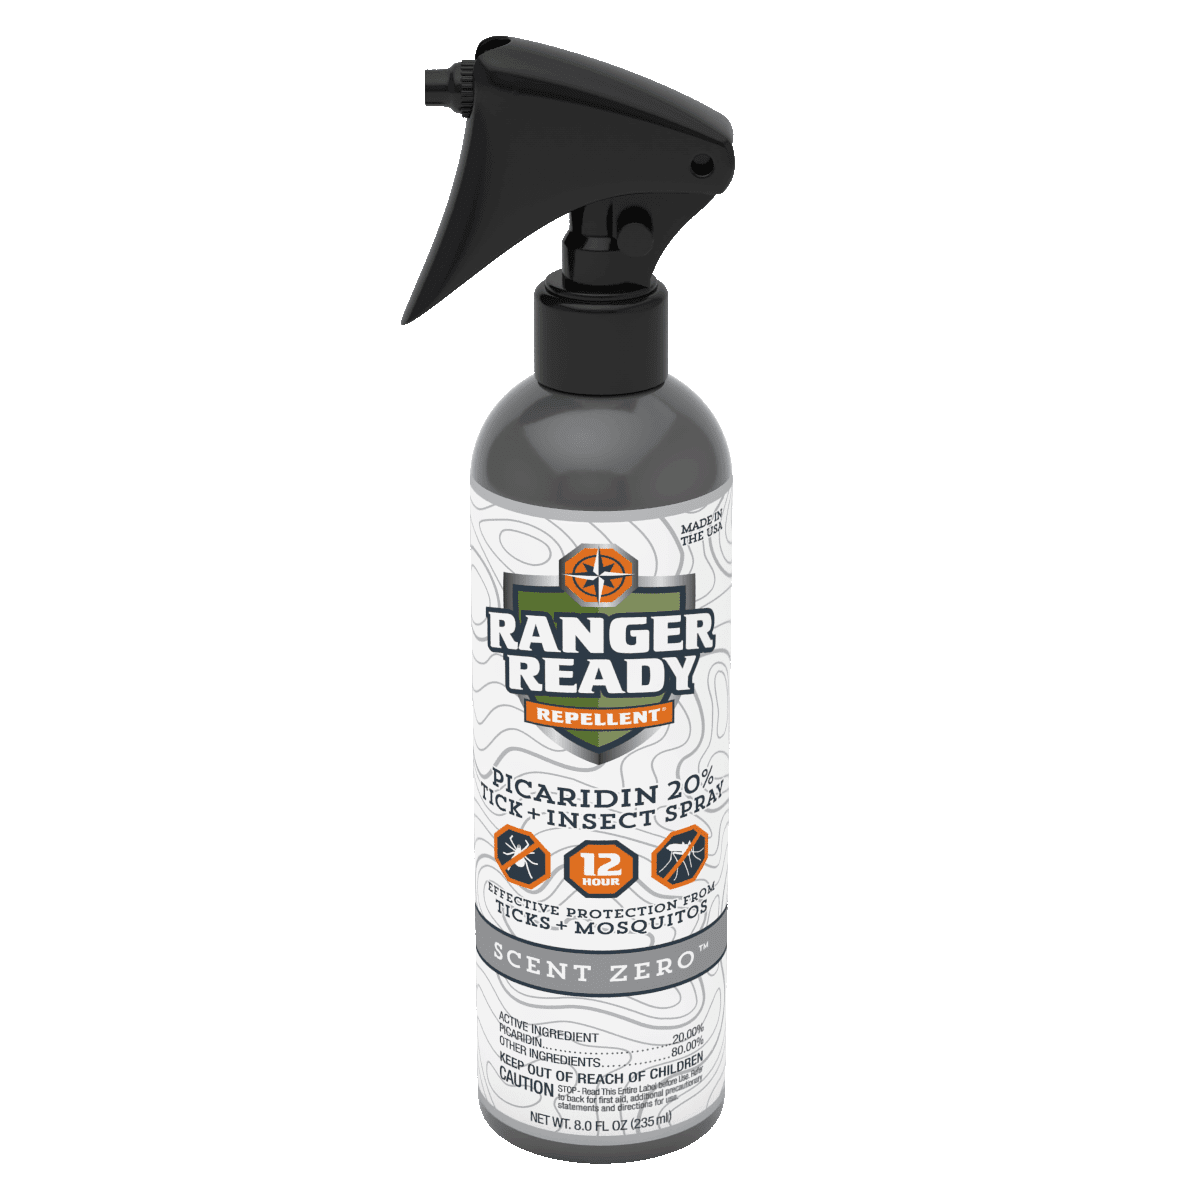 Ranger Ready Premium Insect Repellent Accessories Ranger Ready Scent Zero 235ml | 8.0oz 